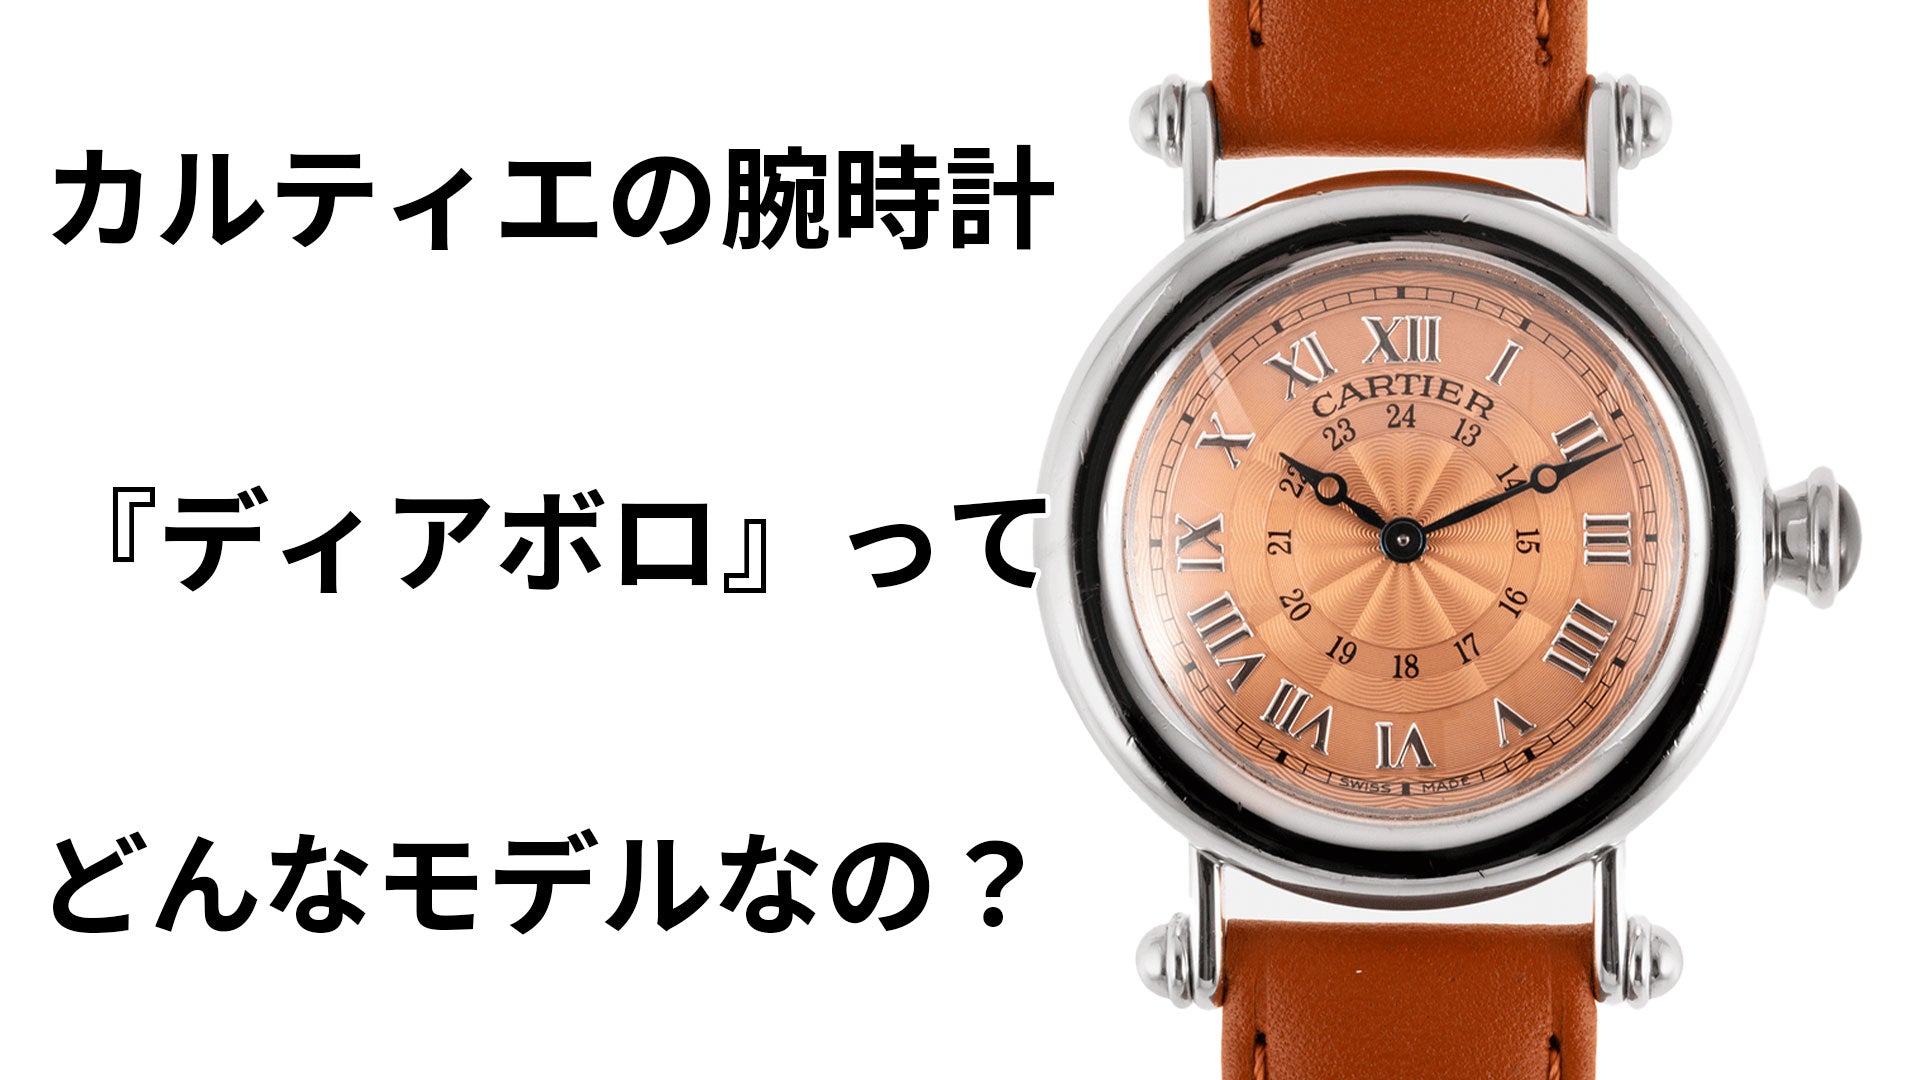 What kind of model is Cartier's watch "Diabolo"?